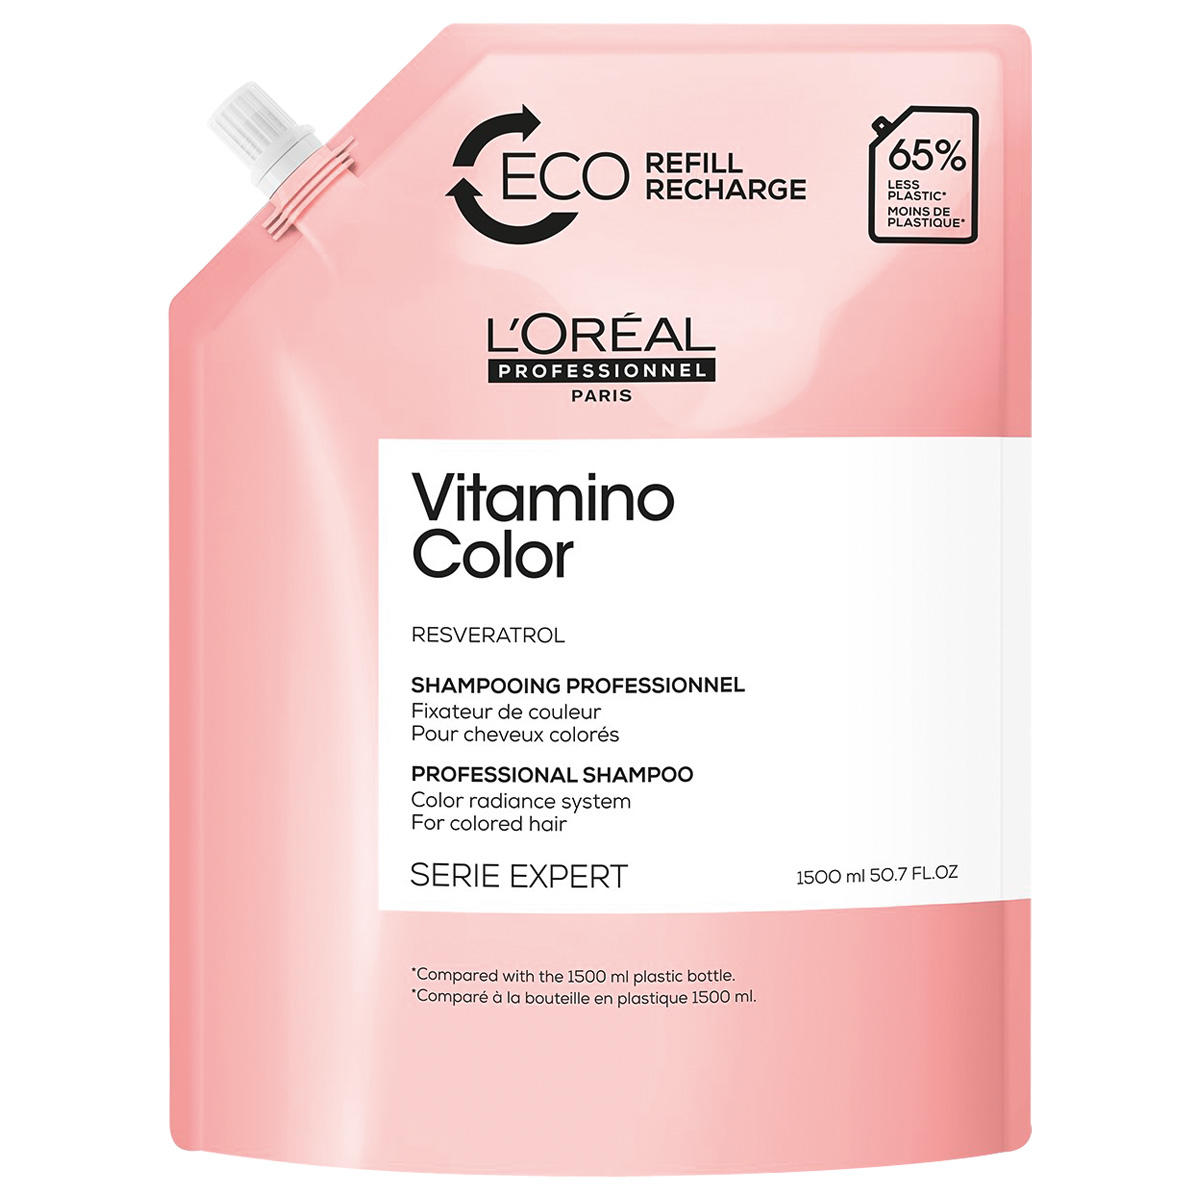 L'Oréal Professionnel Paris Serie Expert Vitamino Color Professional Shampoo Refill 1,5 Liter - 1